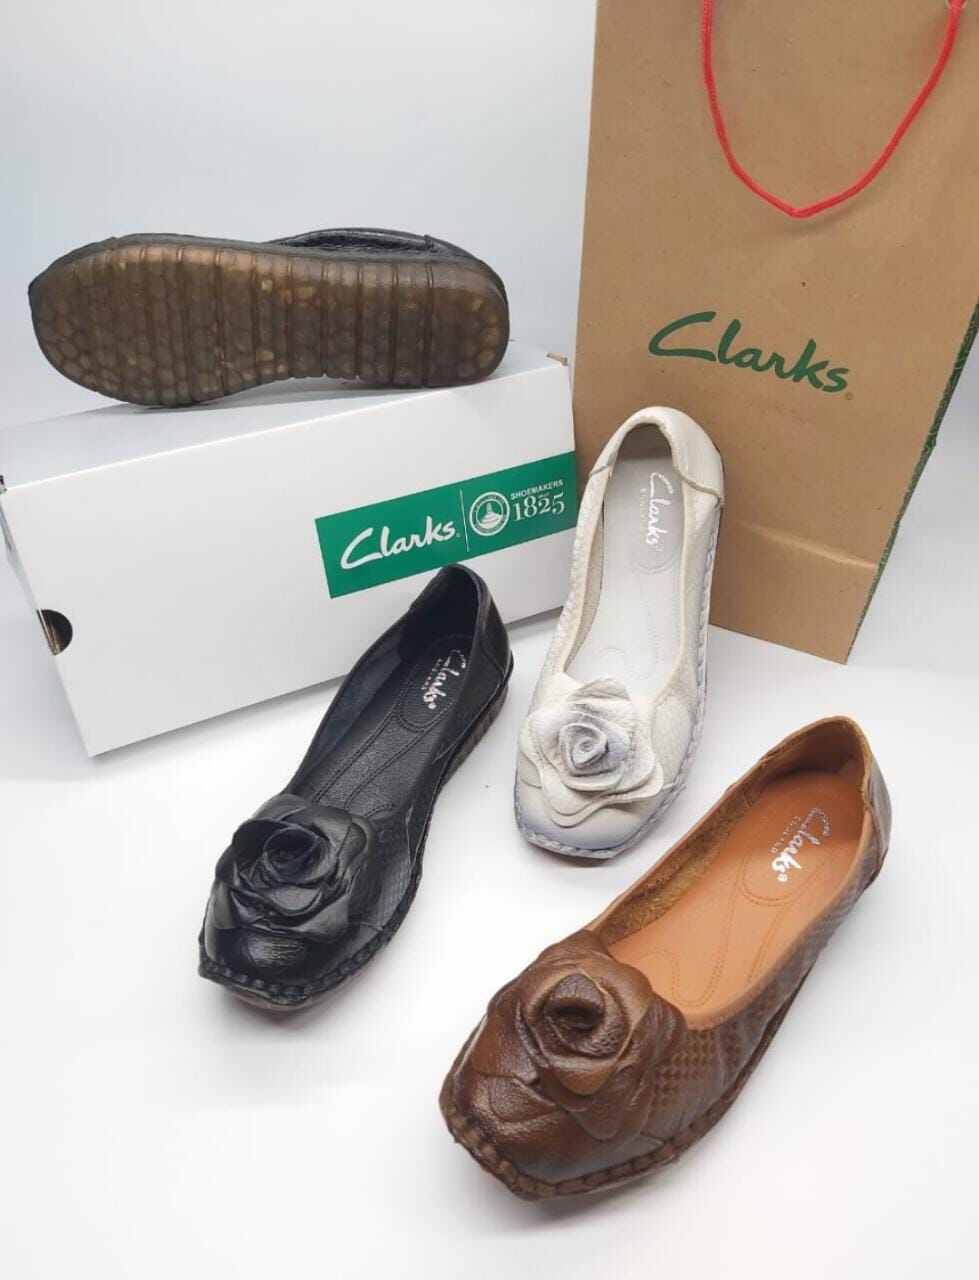 Sepatu Clarks Wanita 887 | Lazada Indonesia